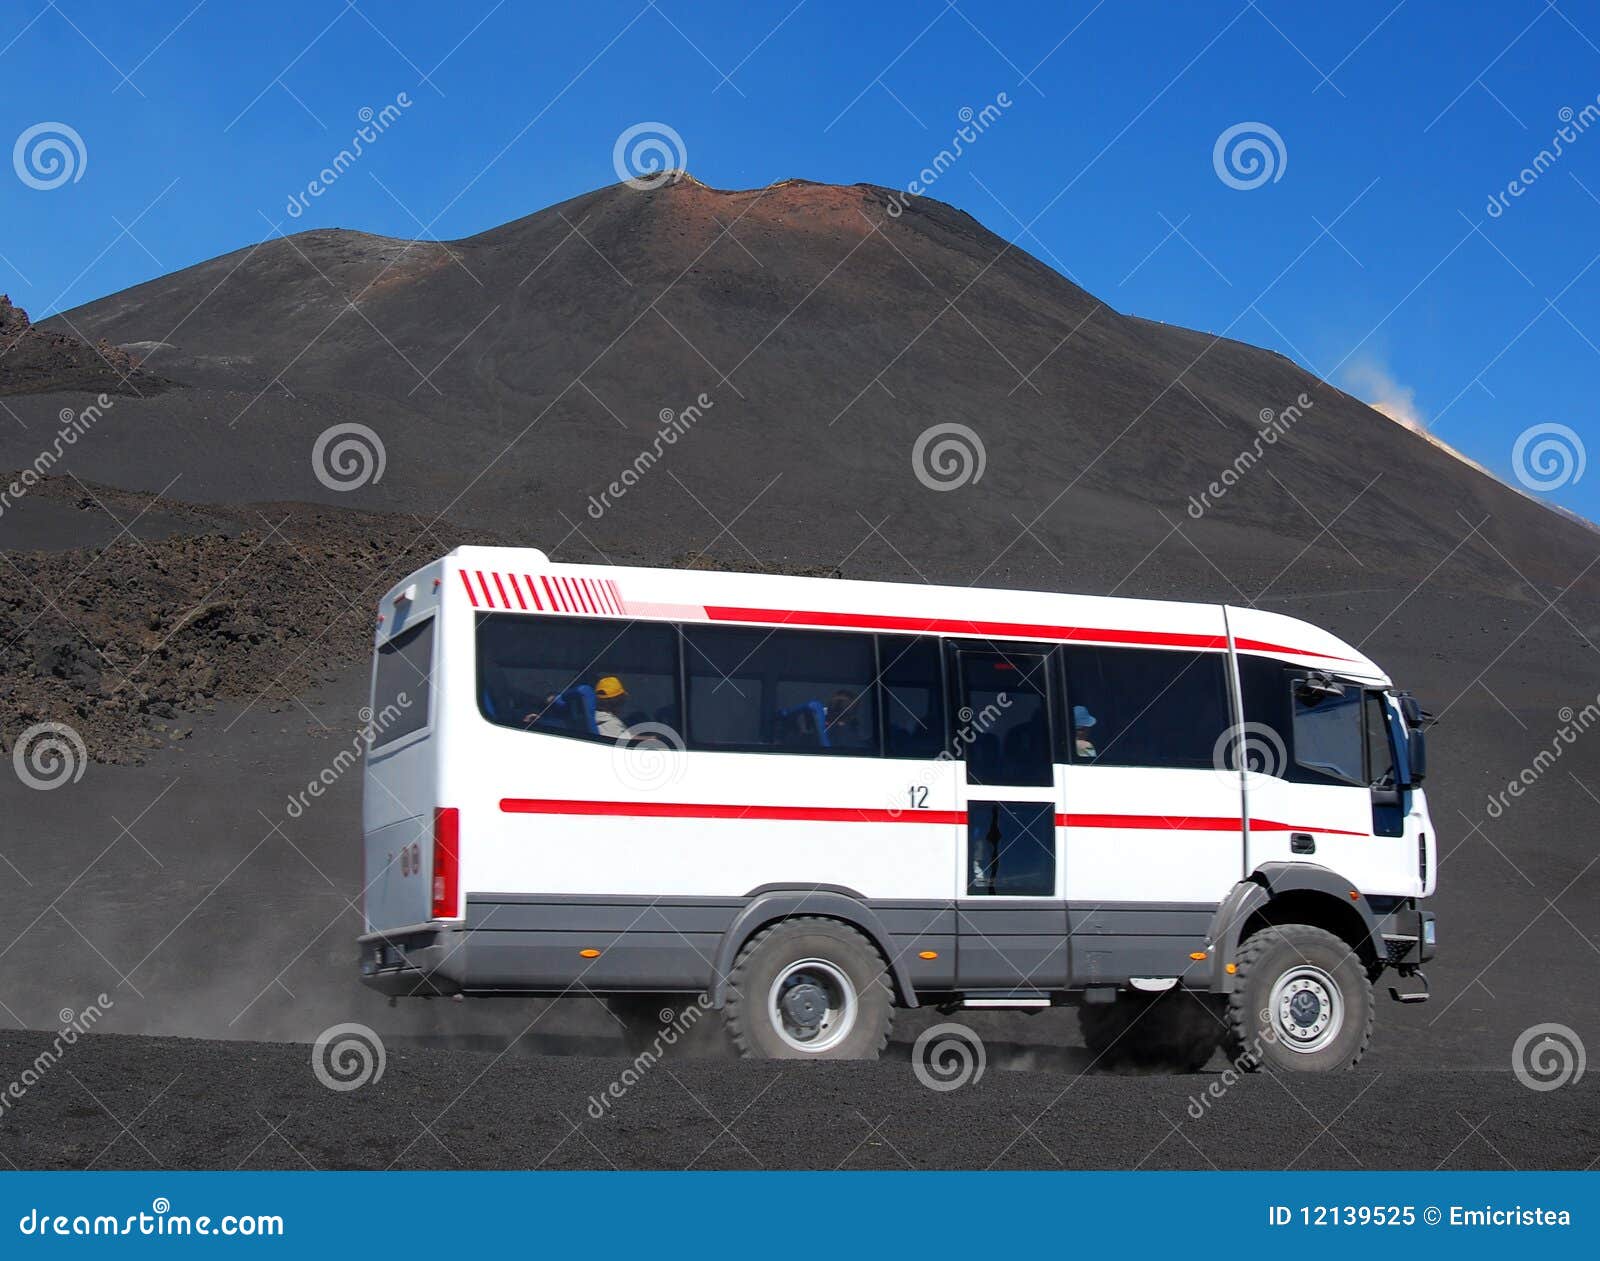 etna touristic bus, sicily, italy